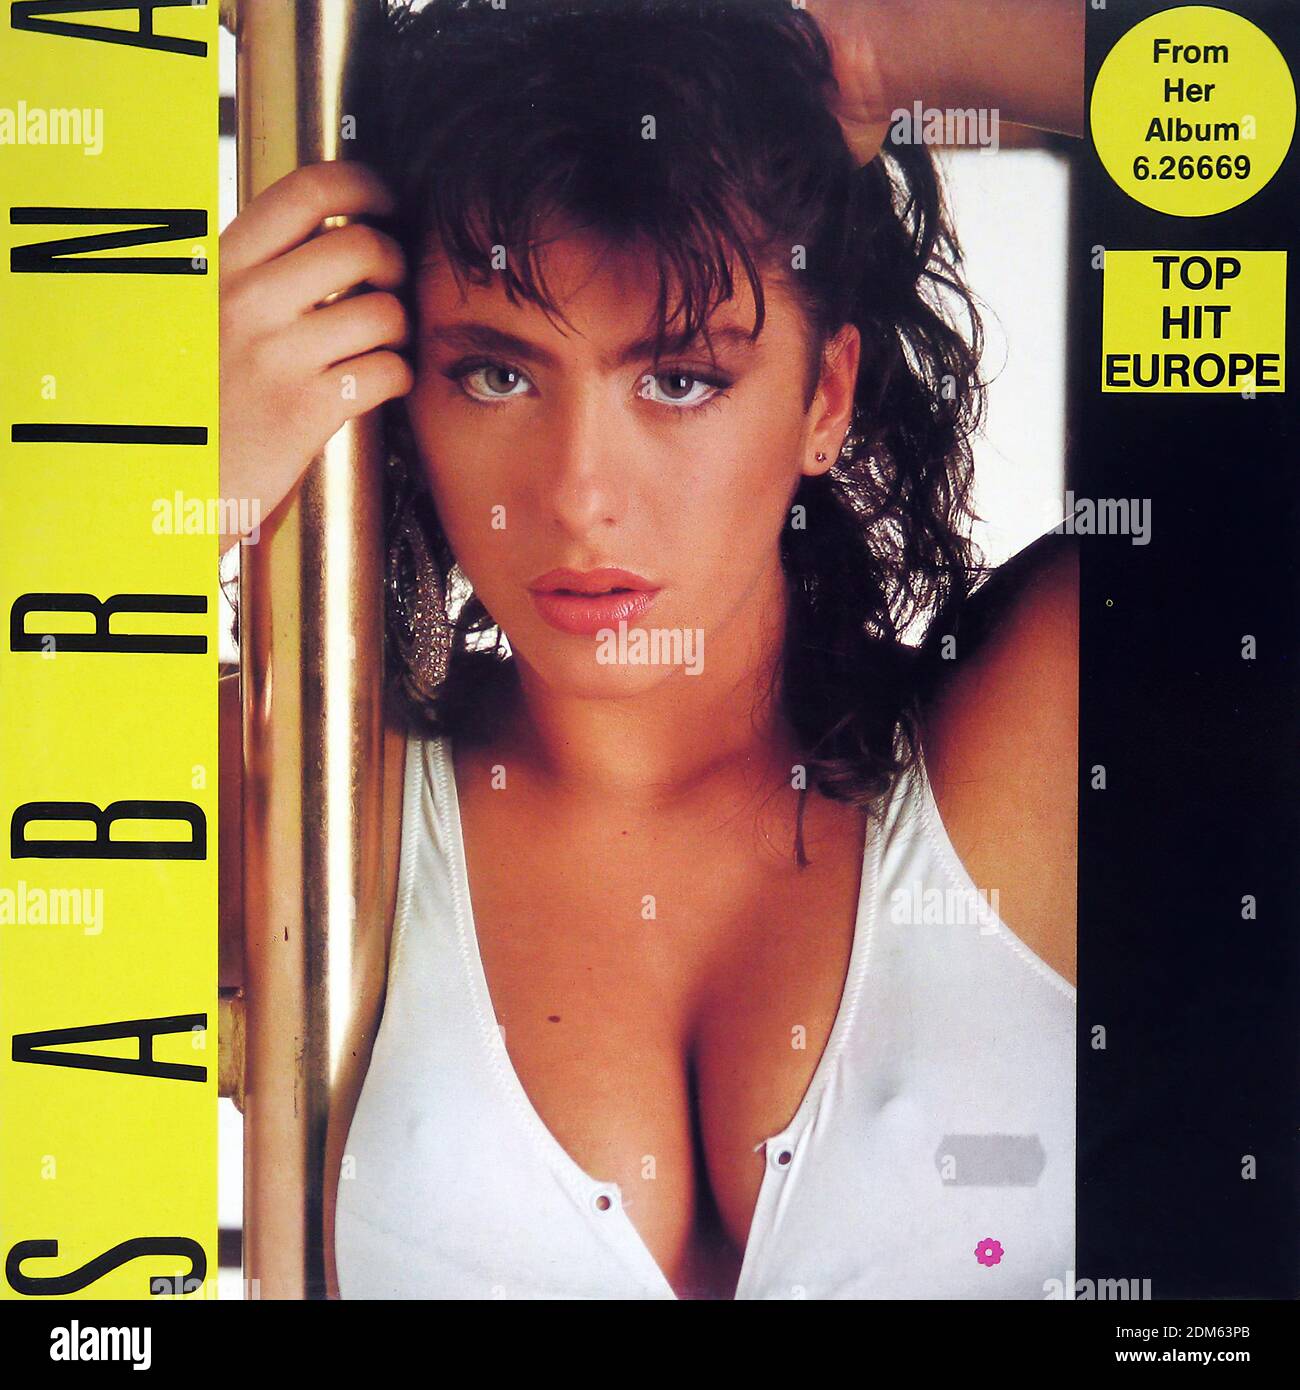 Sabrina Boys 12 Maxi Single - Vintage Vinyl Record Cover Stock Photo - Alamy